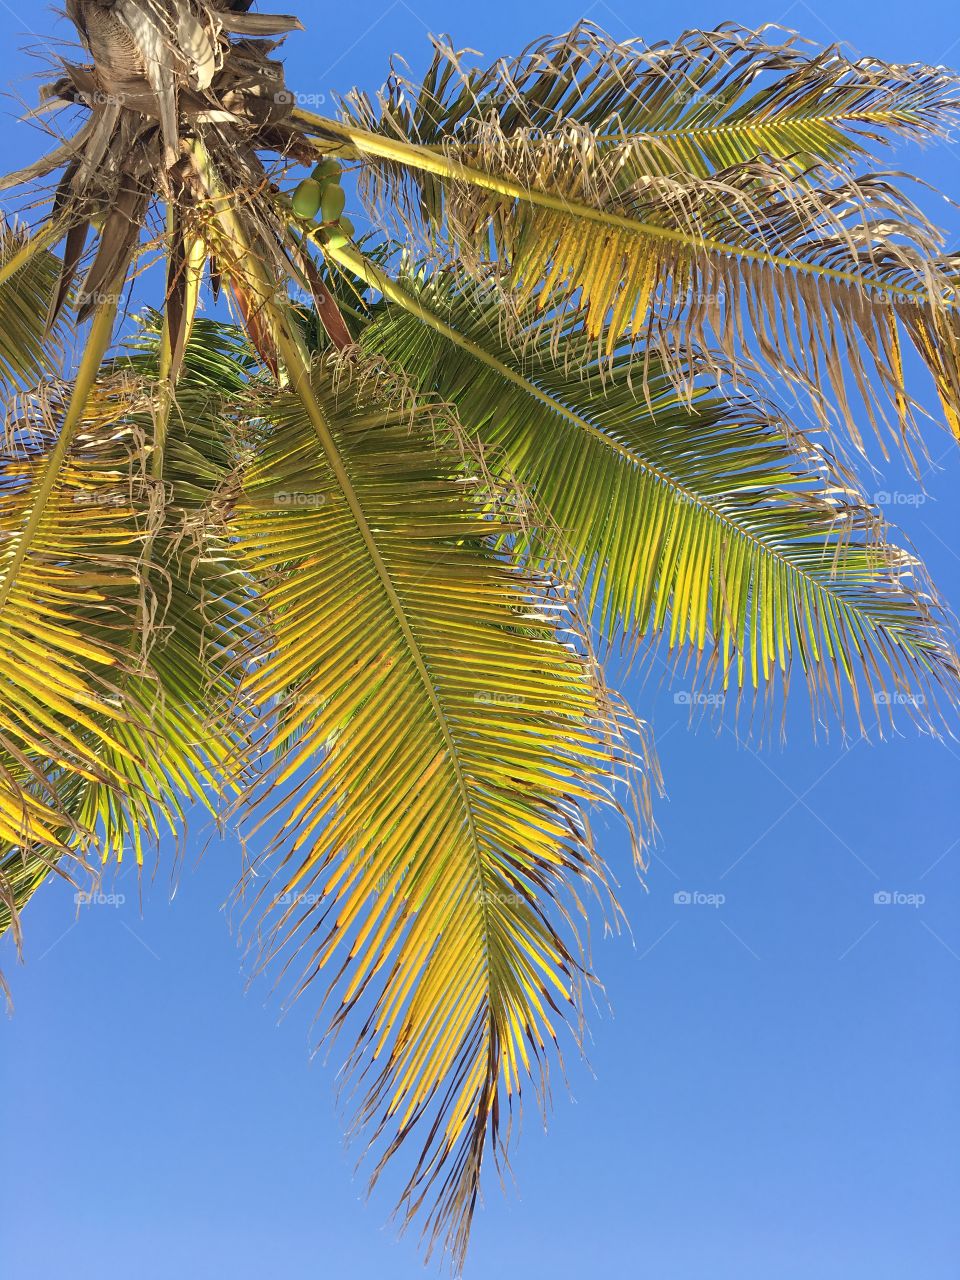 A palm tree at Baby Beach in Aruba.